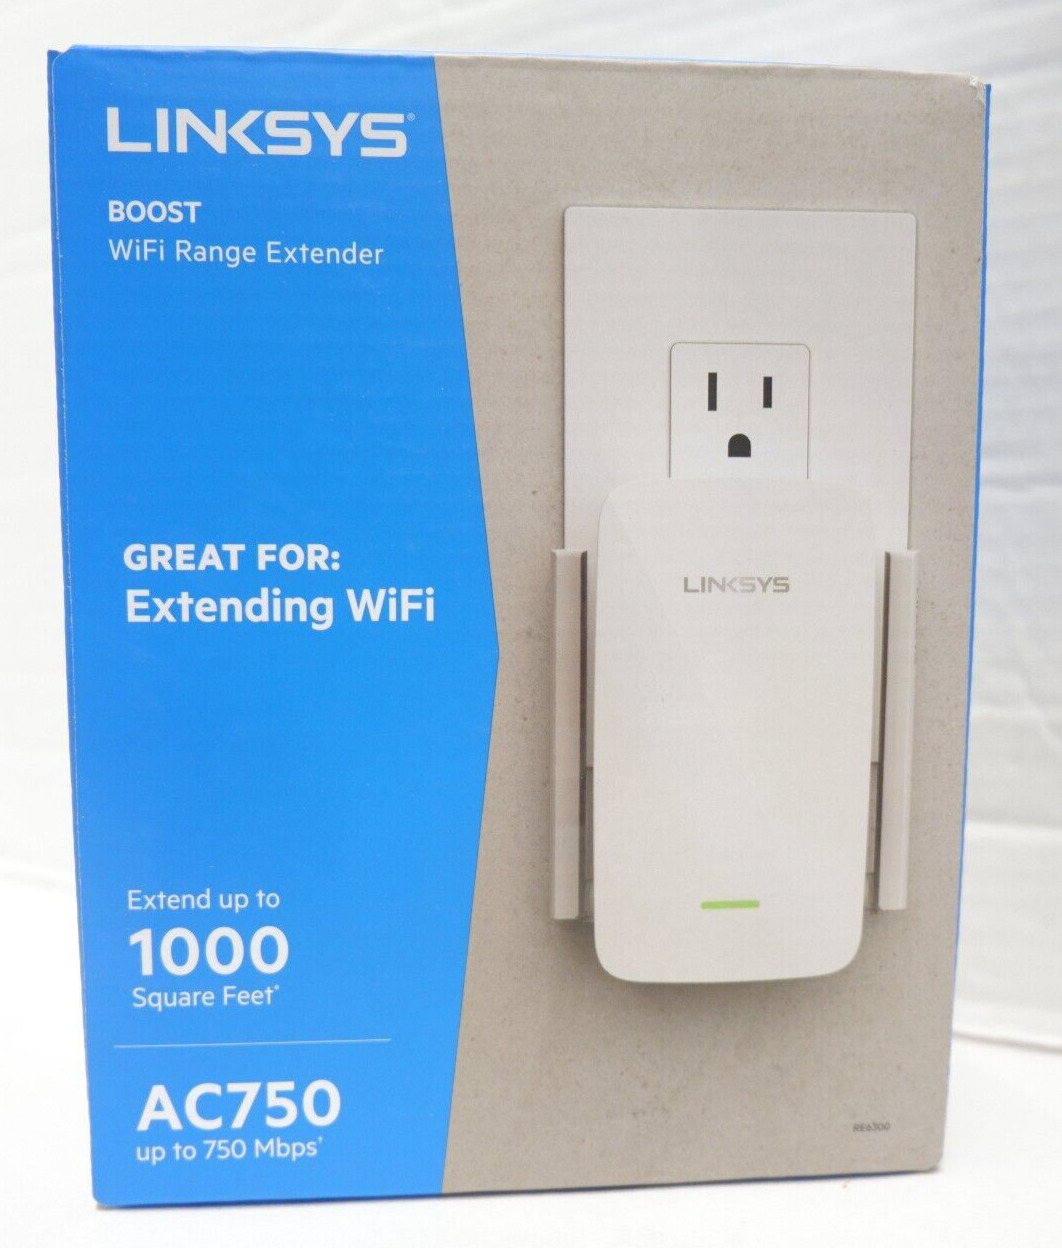 Linksys Boost RE6300 AC750 WiFi Range Extender